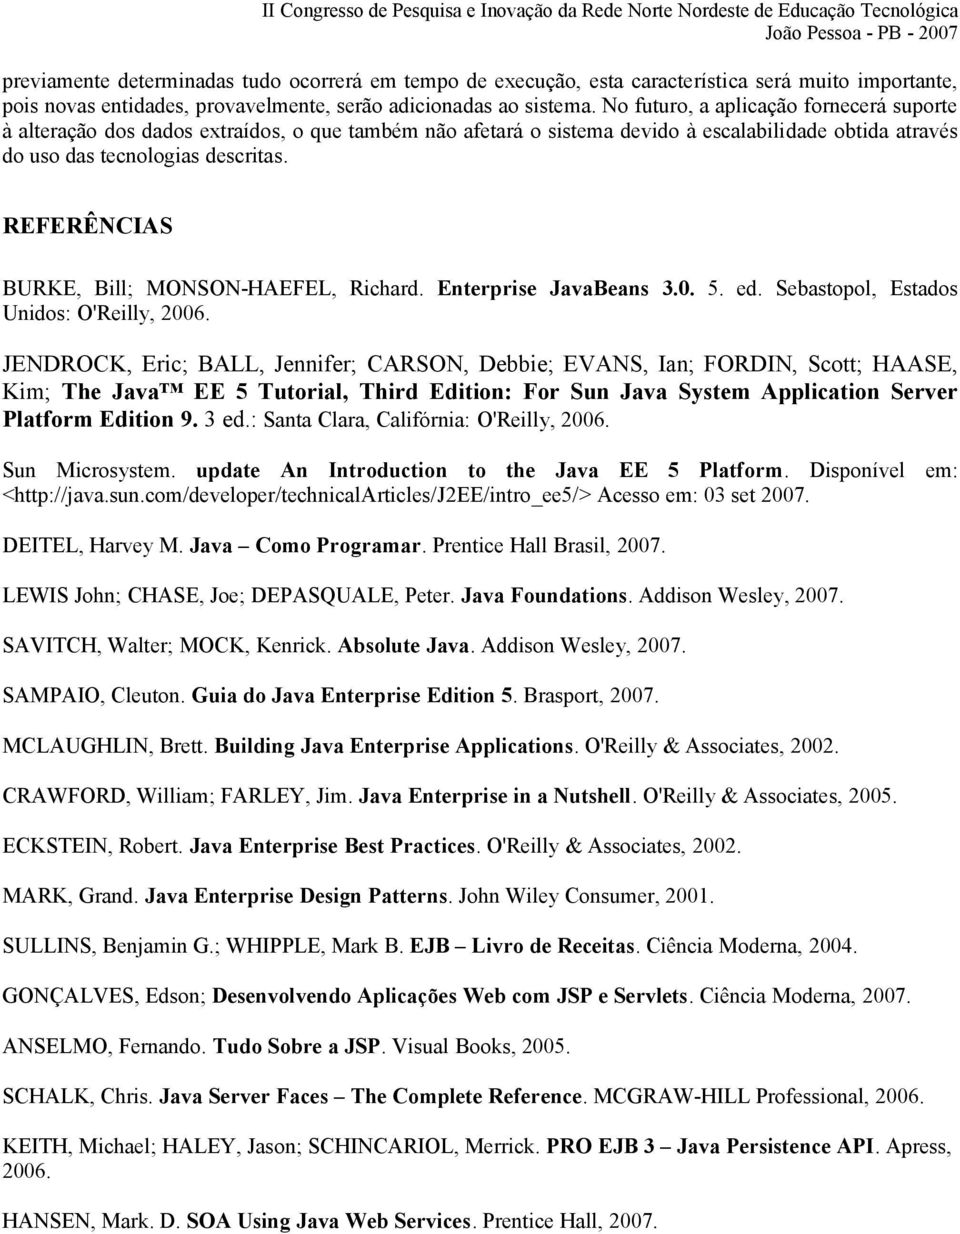 REFERÊNCIAS BURKE, Bill; MONSON-HAEFEL, Richard. Enterprise JavaBeans 3.0. 5. ed. Sebastopol, Estados Unidos: O'Reilly, 2006.